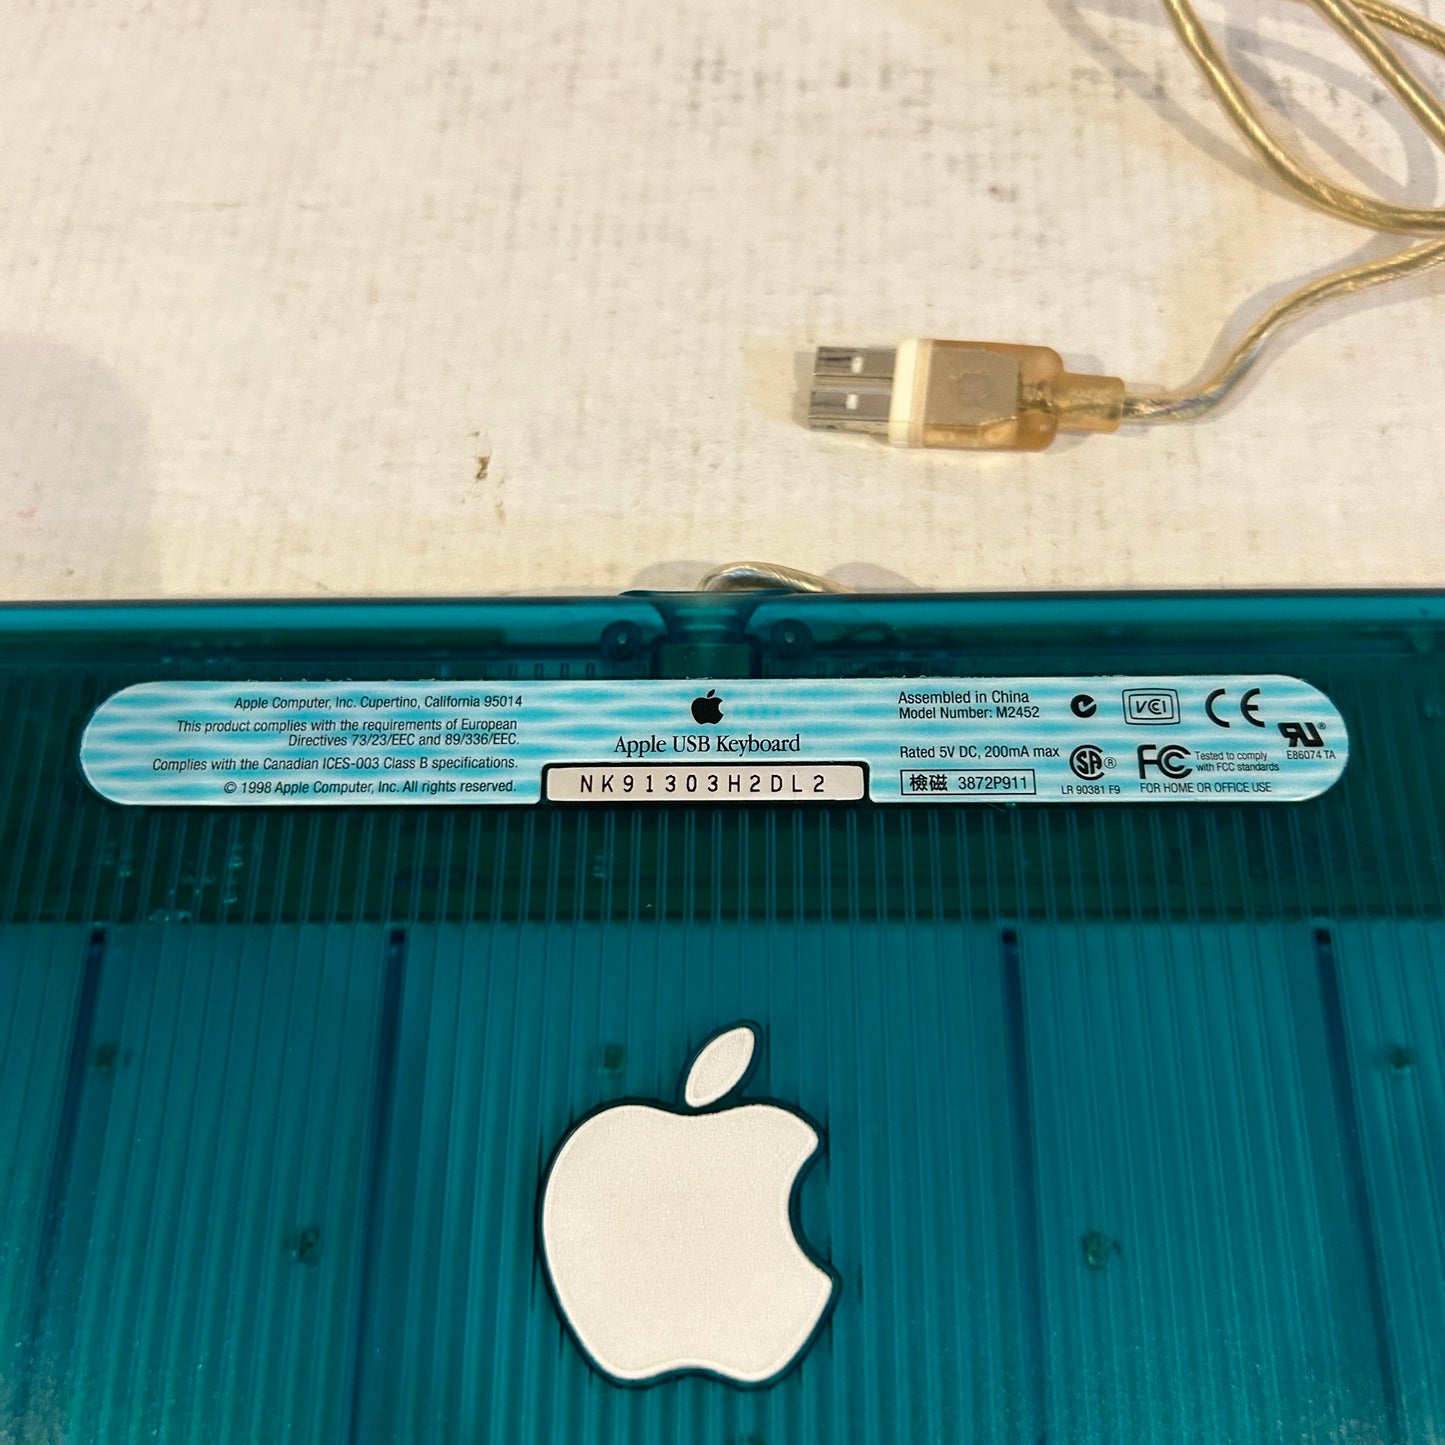 Vintage Apple iMac G3 USB Keyboard Teal - M2452